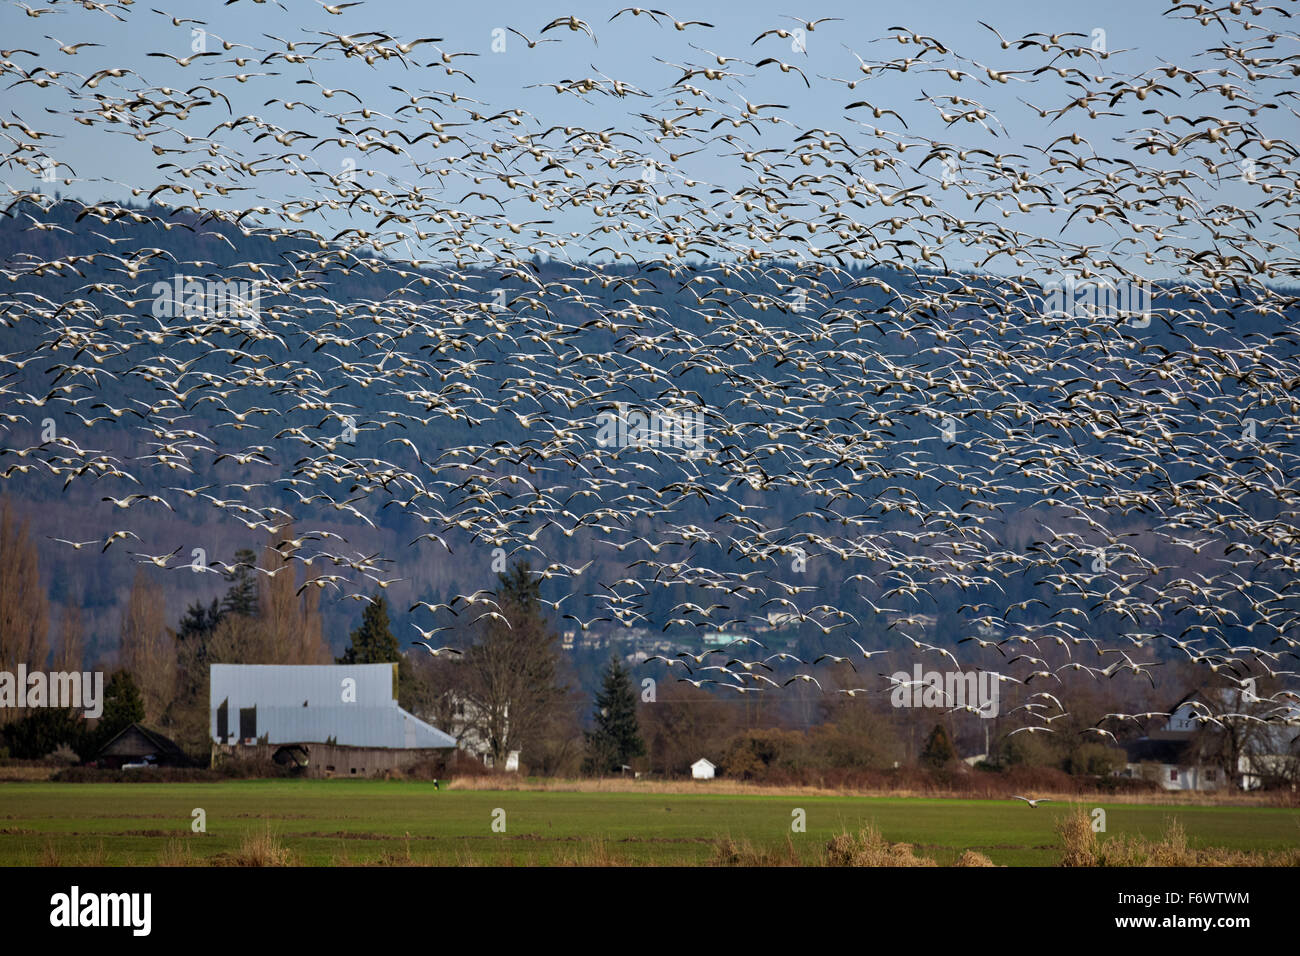 WA12078-00...WASHINGTON - Snow geese flying over fields the Skagit Wildlife Area on Fox Island near Mount Vernon. Stock Photo